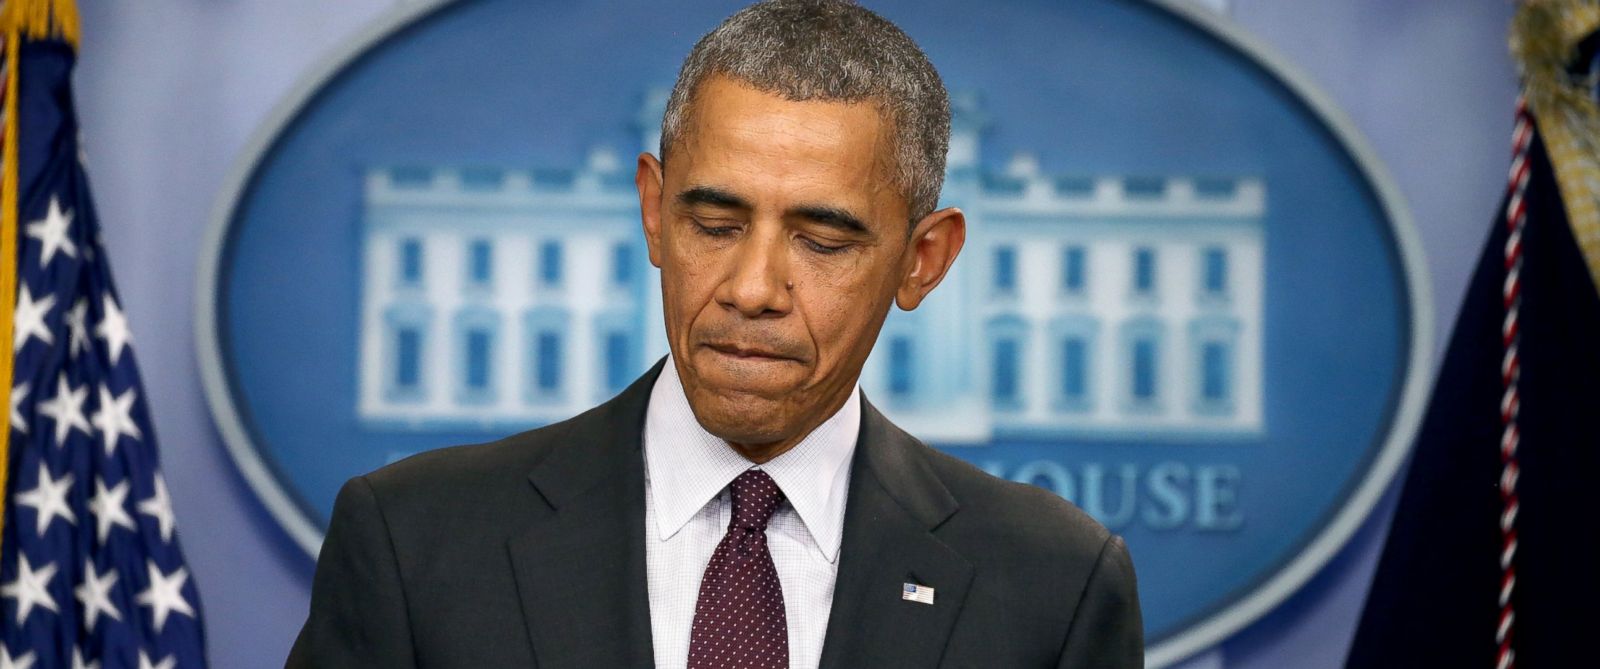 PHOTO: President Barack Obama speaks at a press conference, Oct. 1, 2015, in Washington.